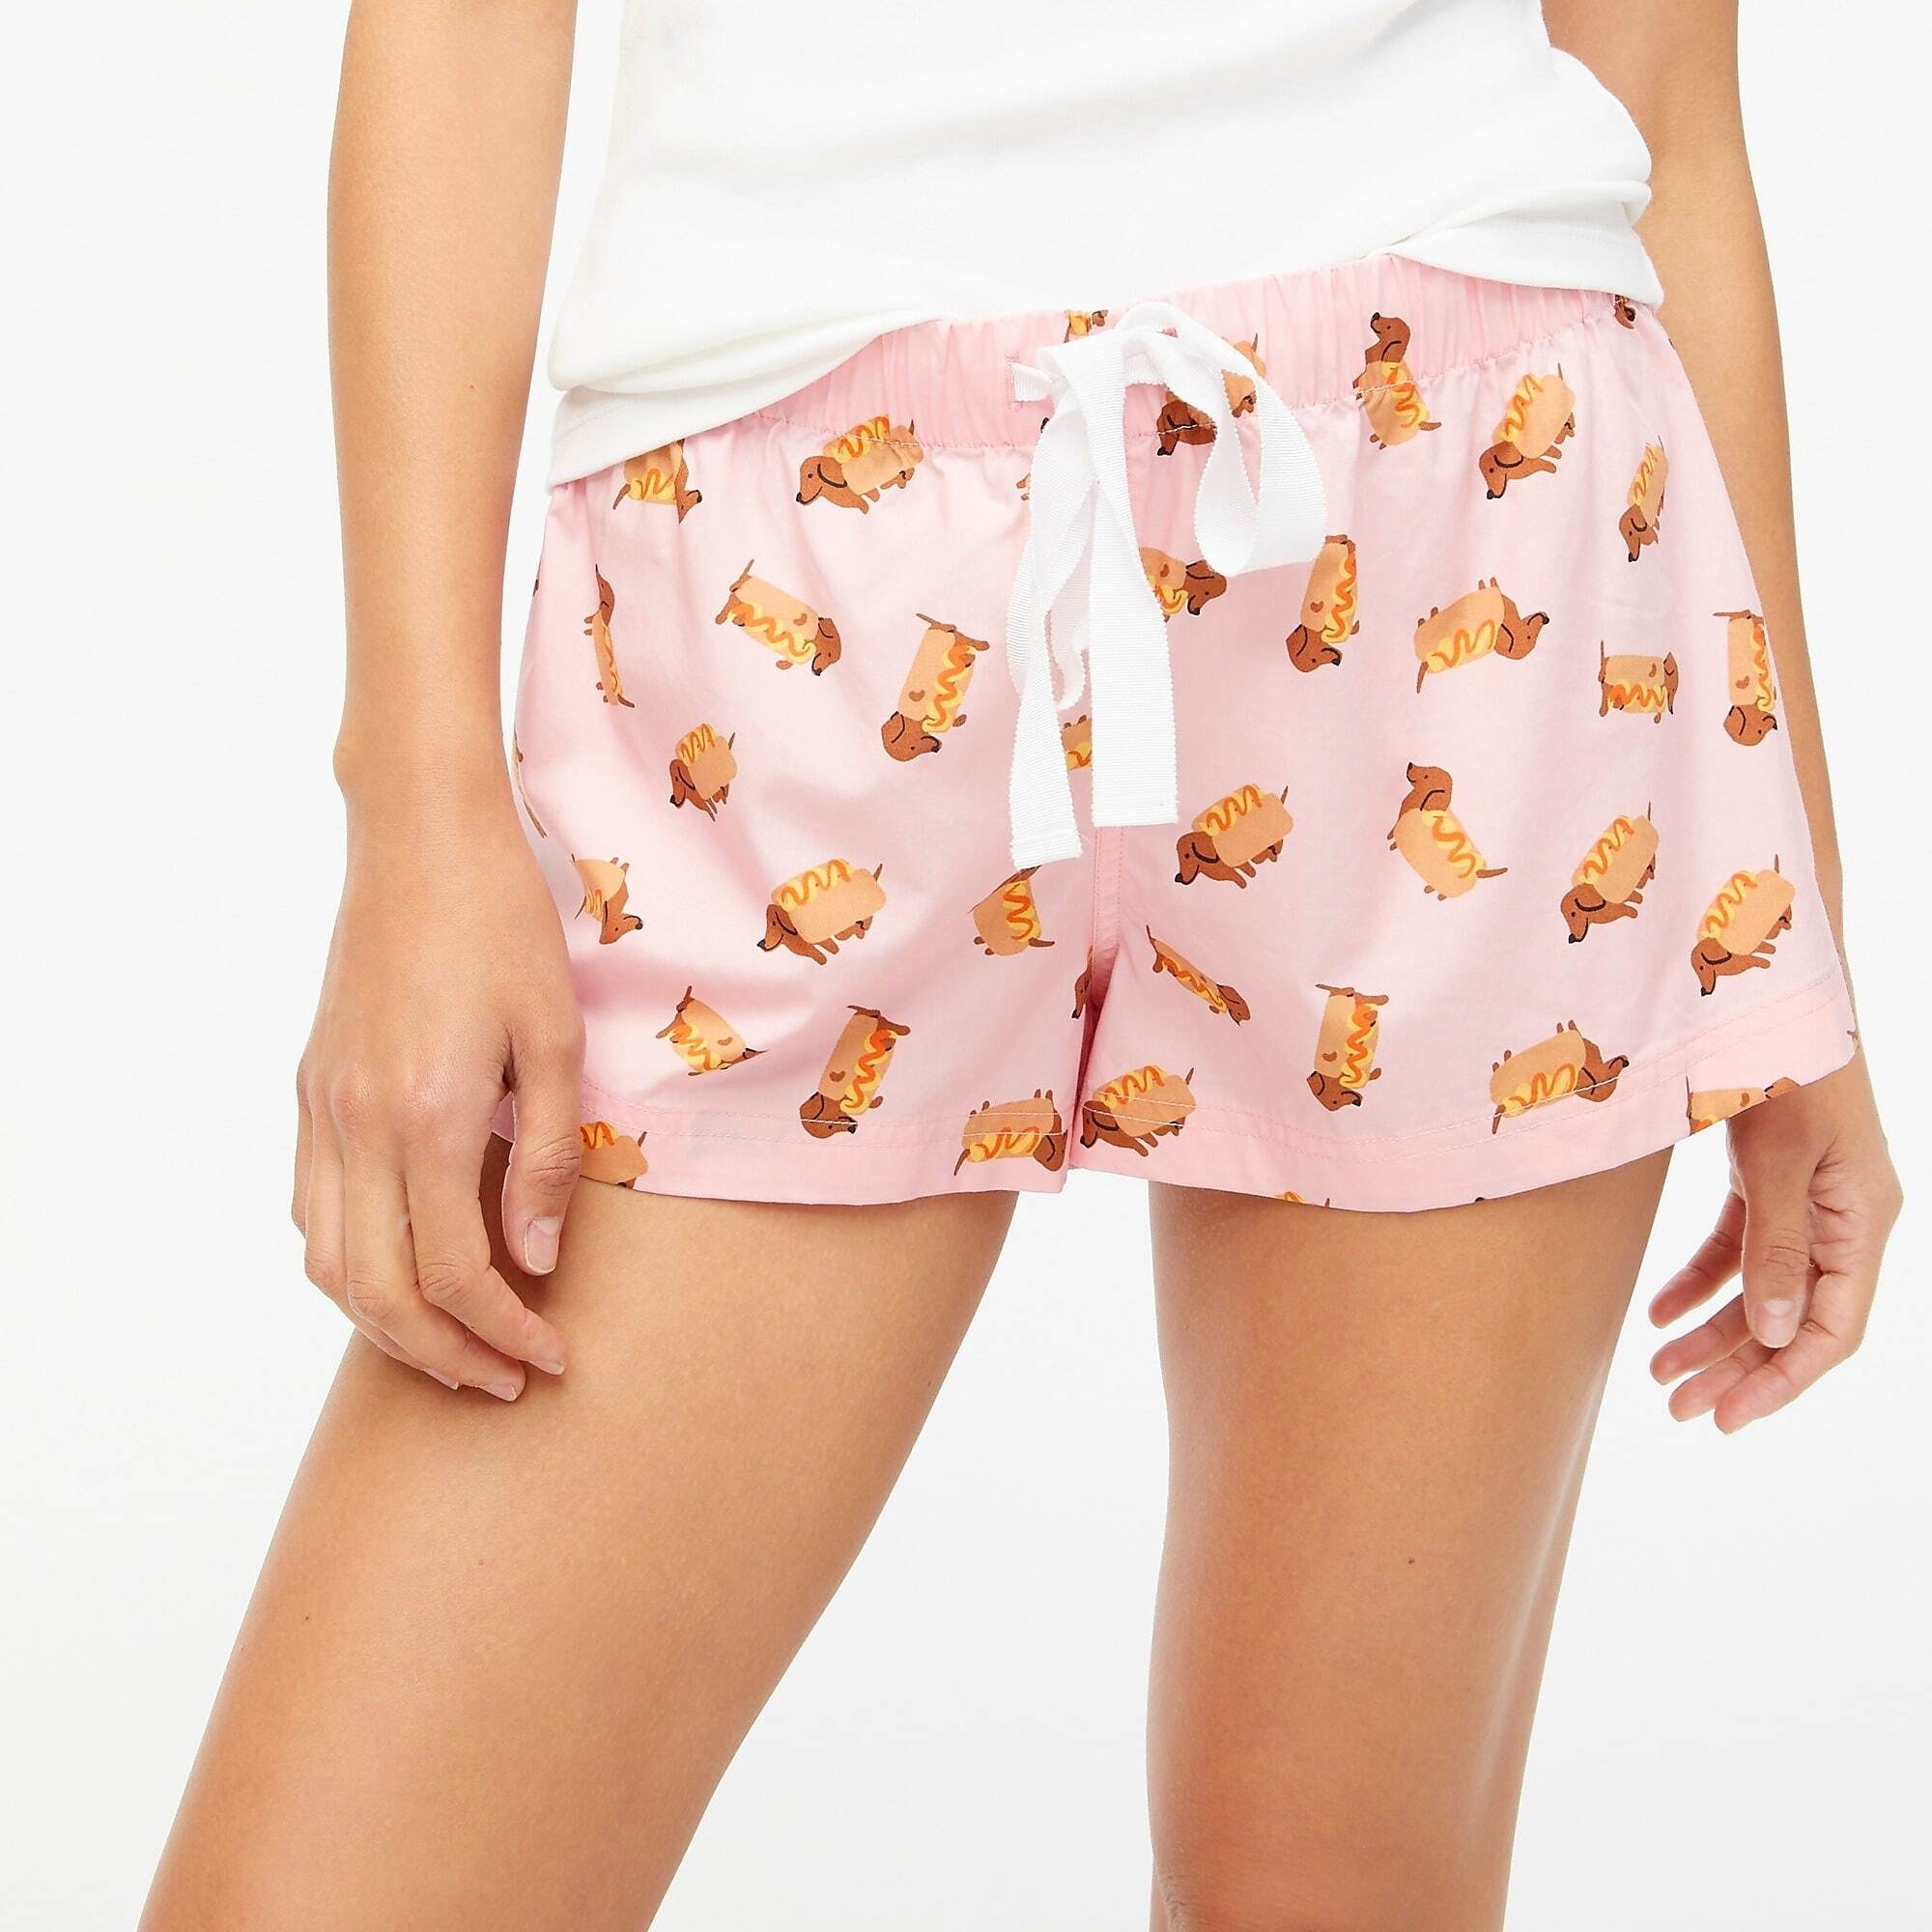 Model wearing the pink hot dog cotton sleep shorts